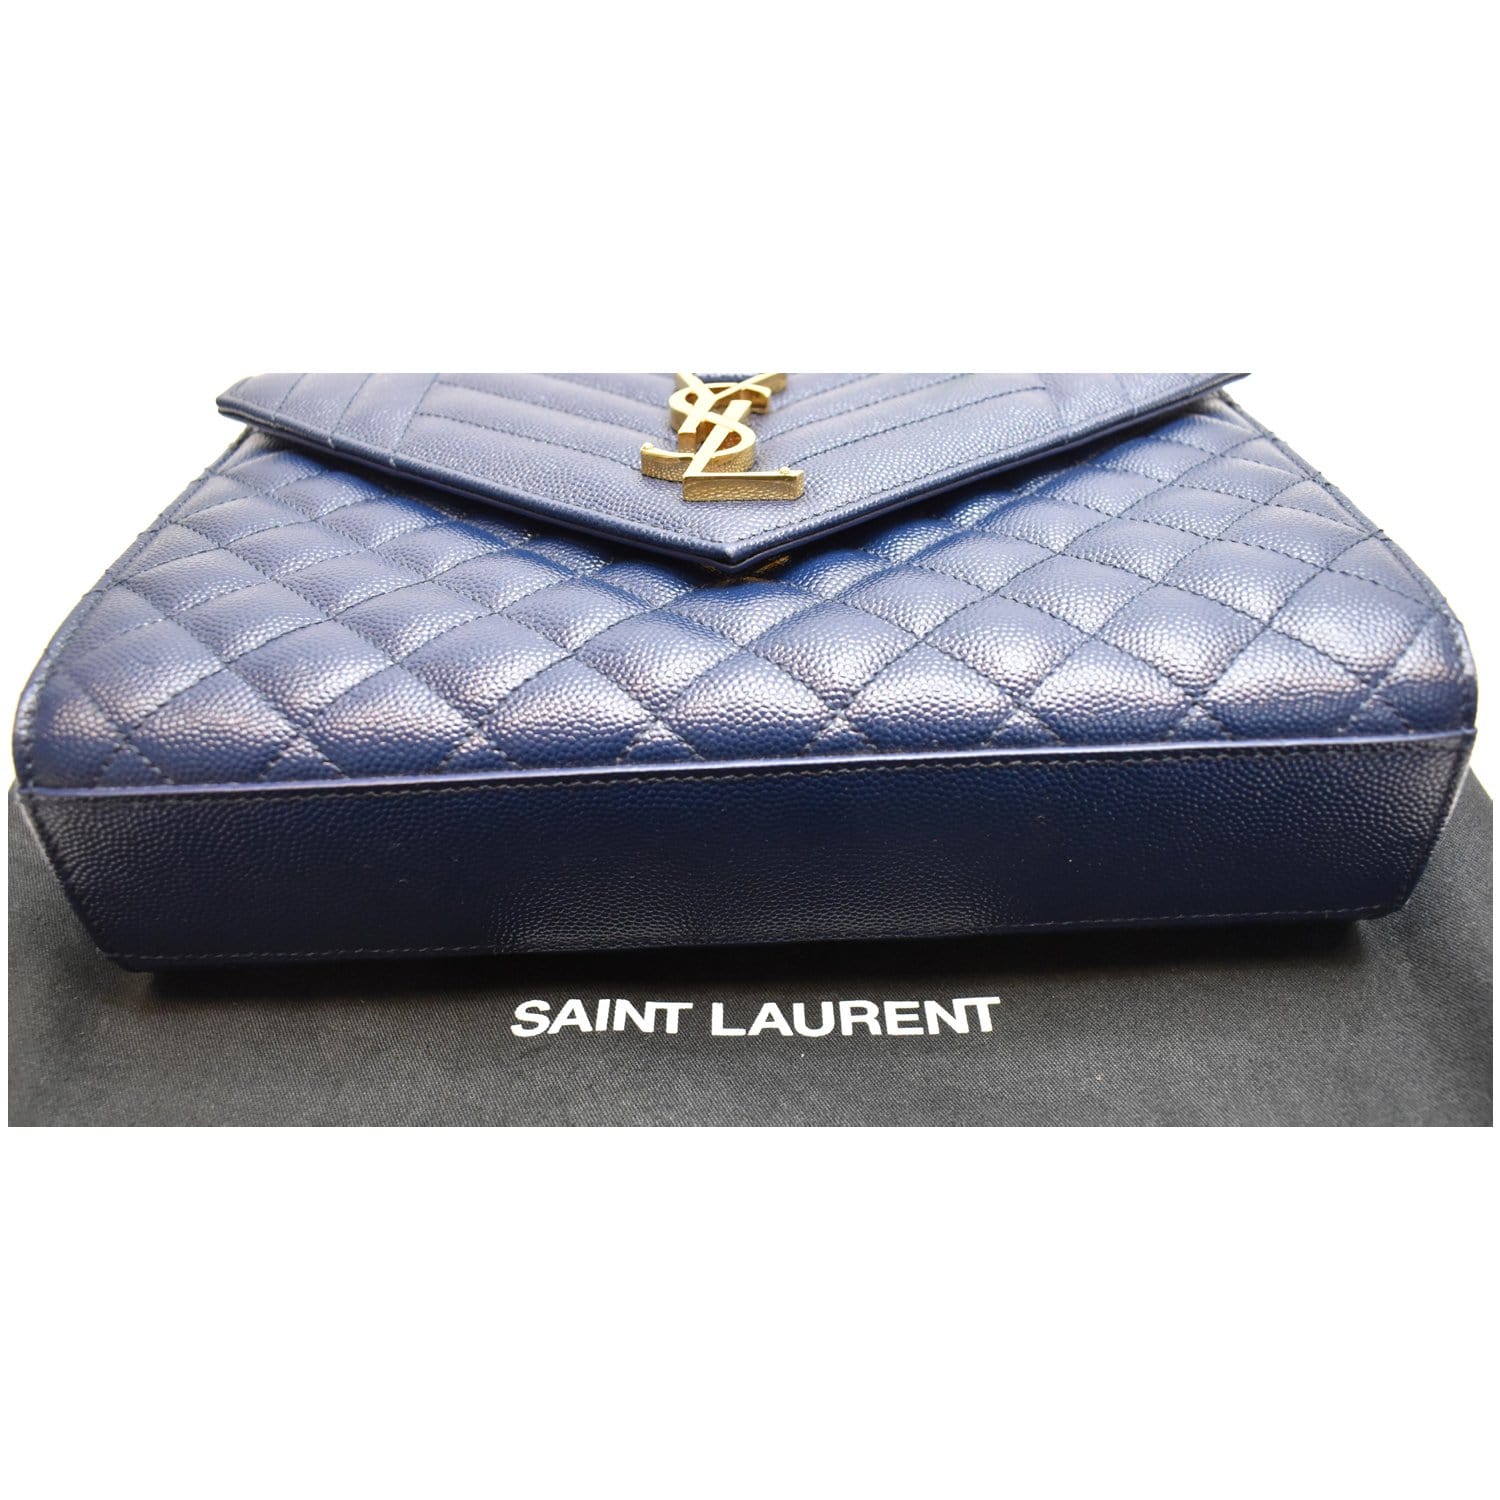 Replica YSL Fake Saint Laurent Medium Envelope Bag In Navy Blue